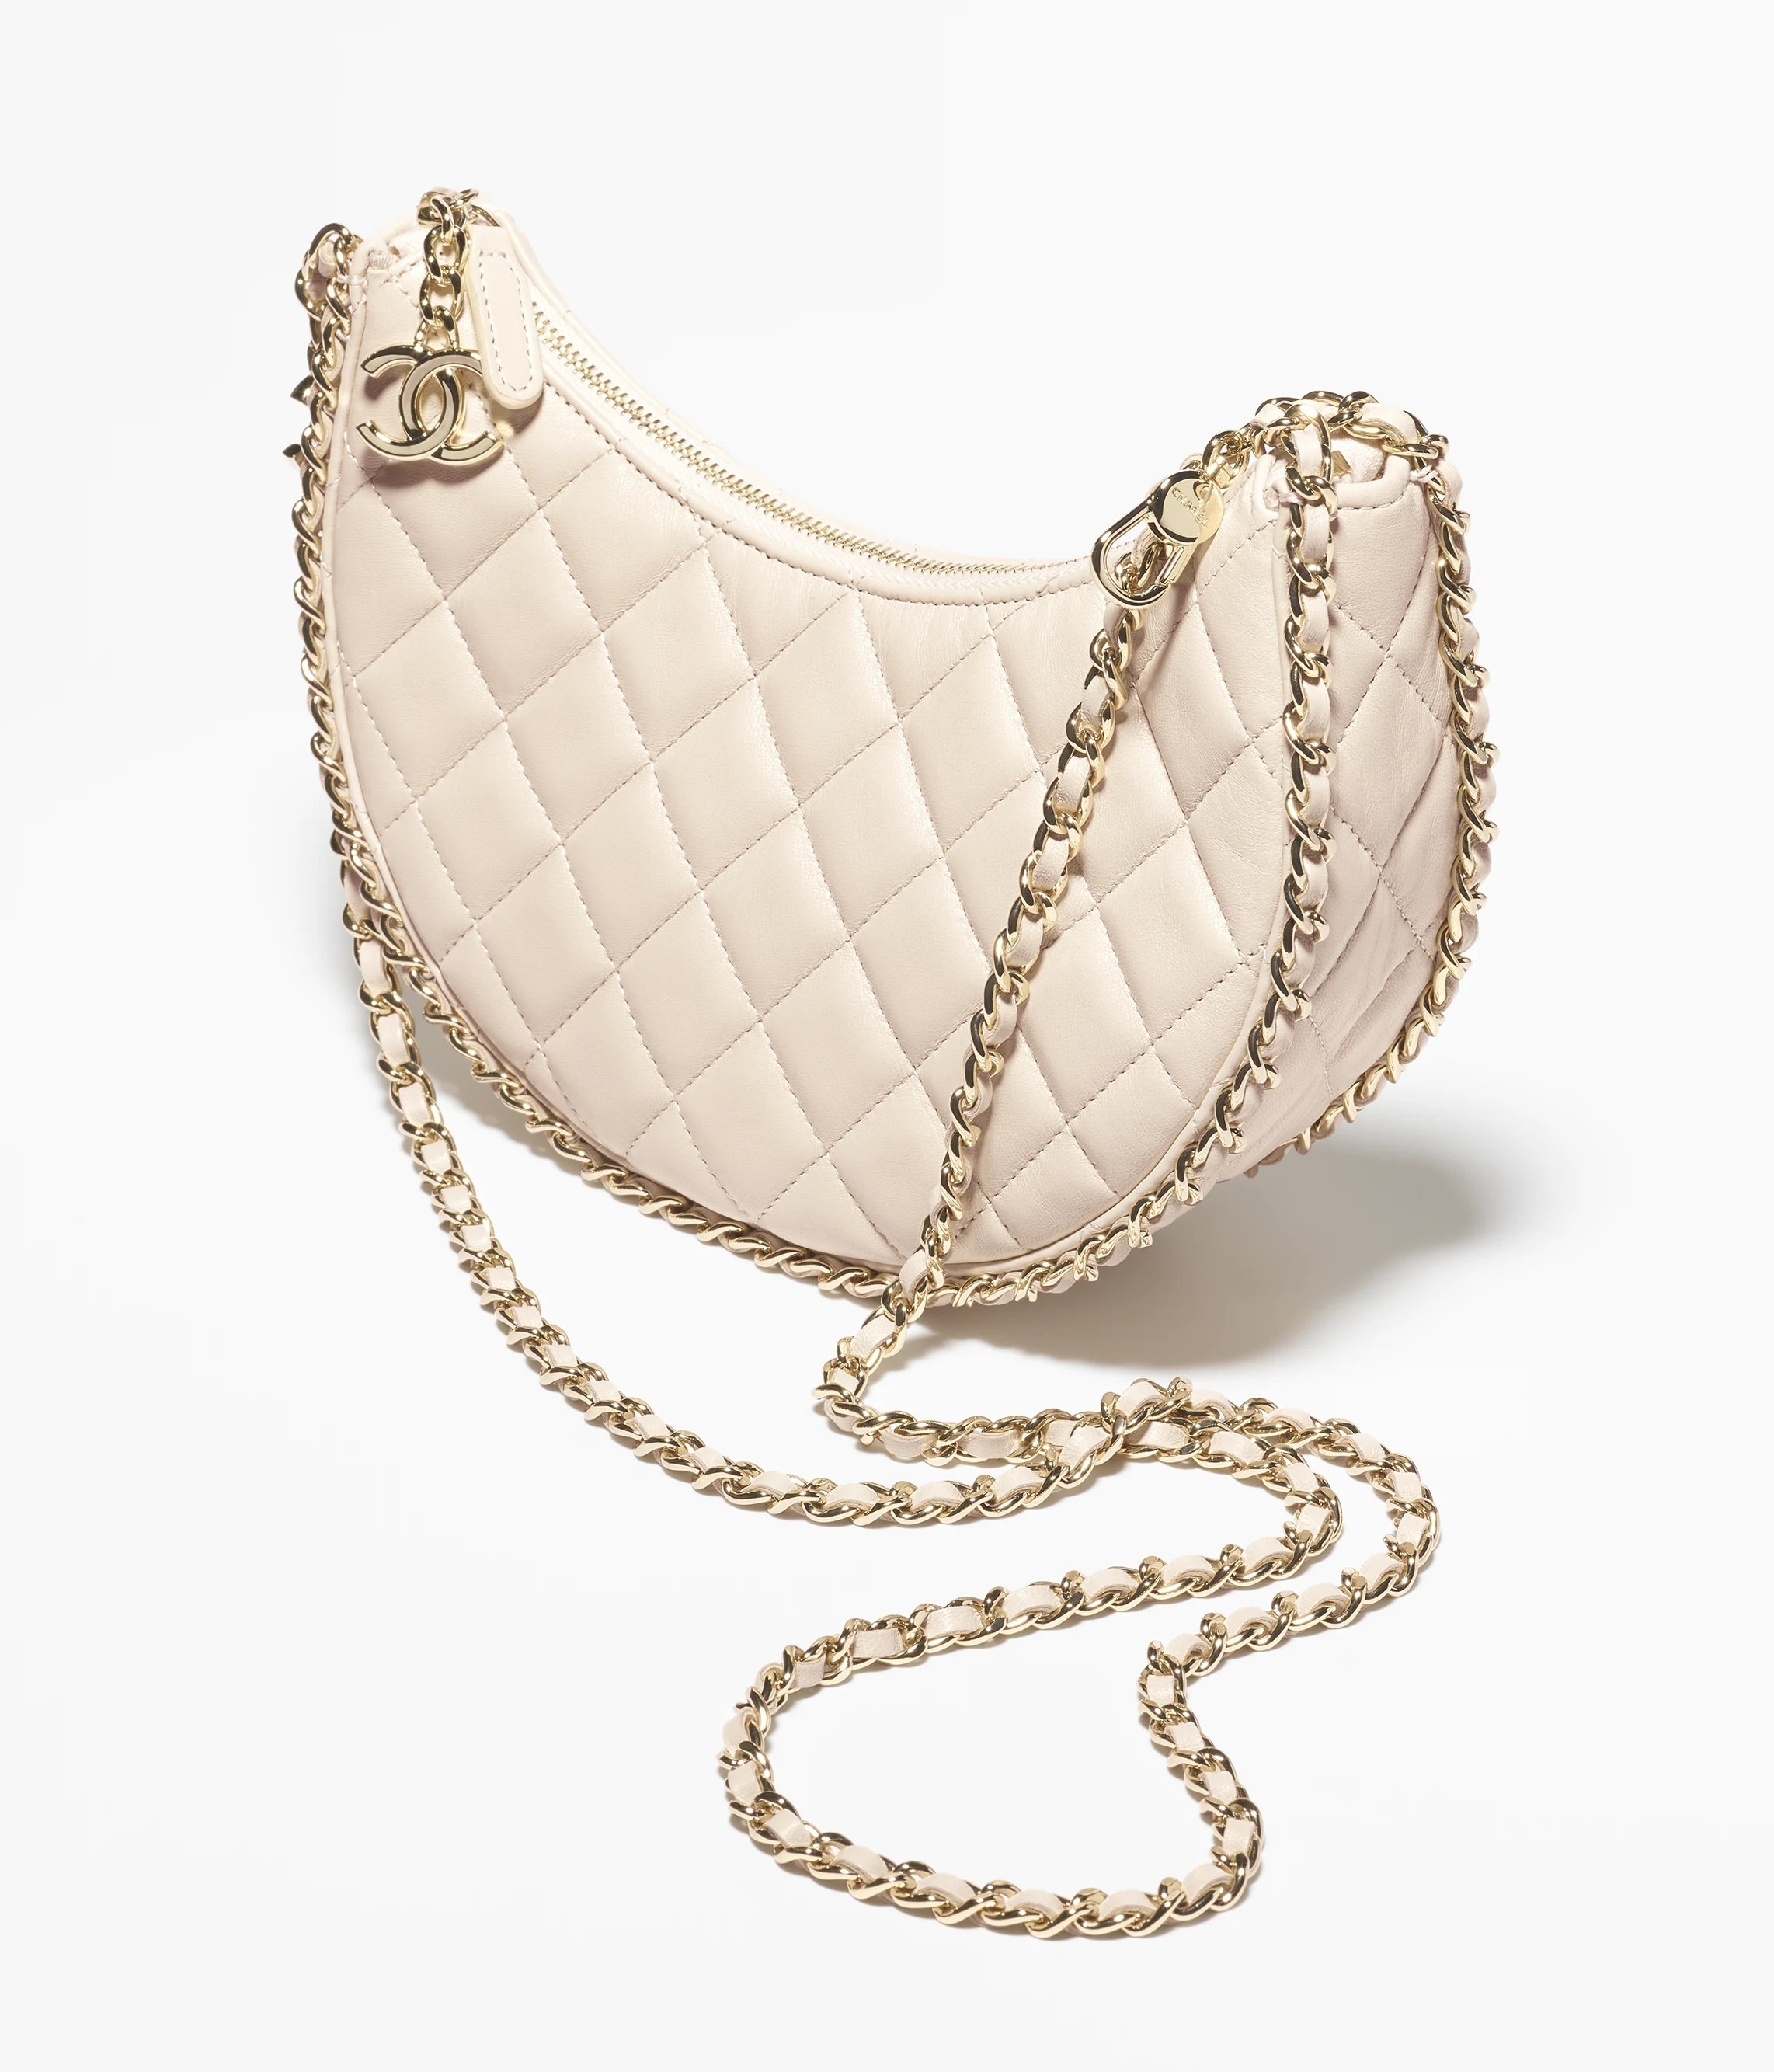 Chanel Small Hobo Bag in Ecru Lambskin & Shiny Light Gold Metal.jpg